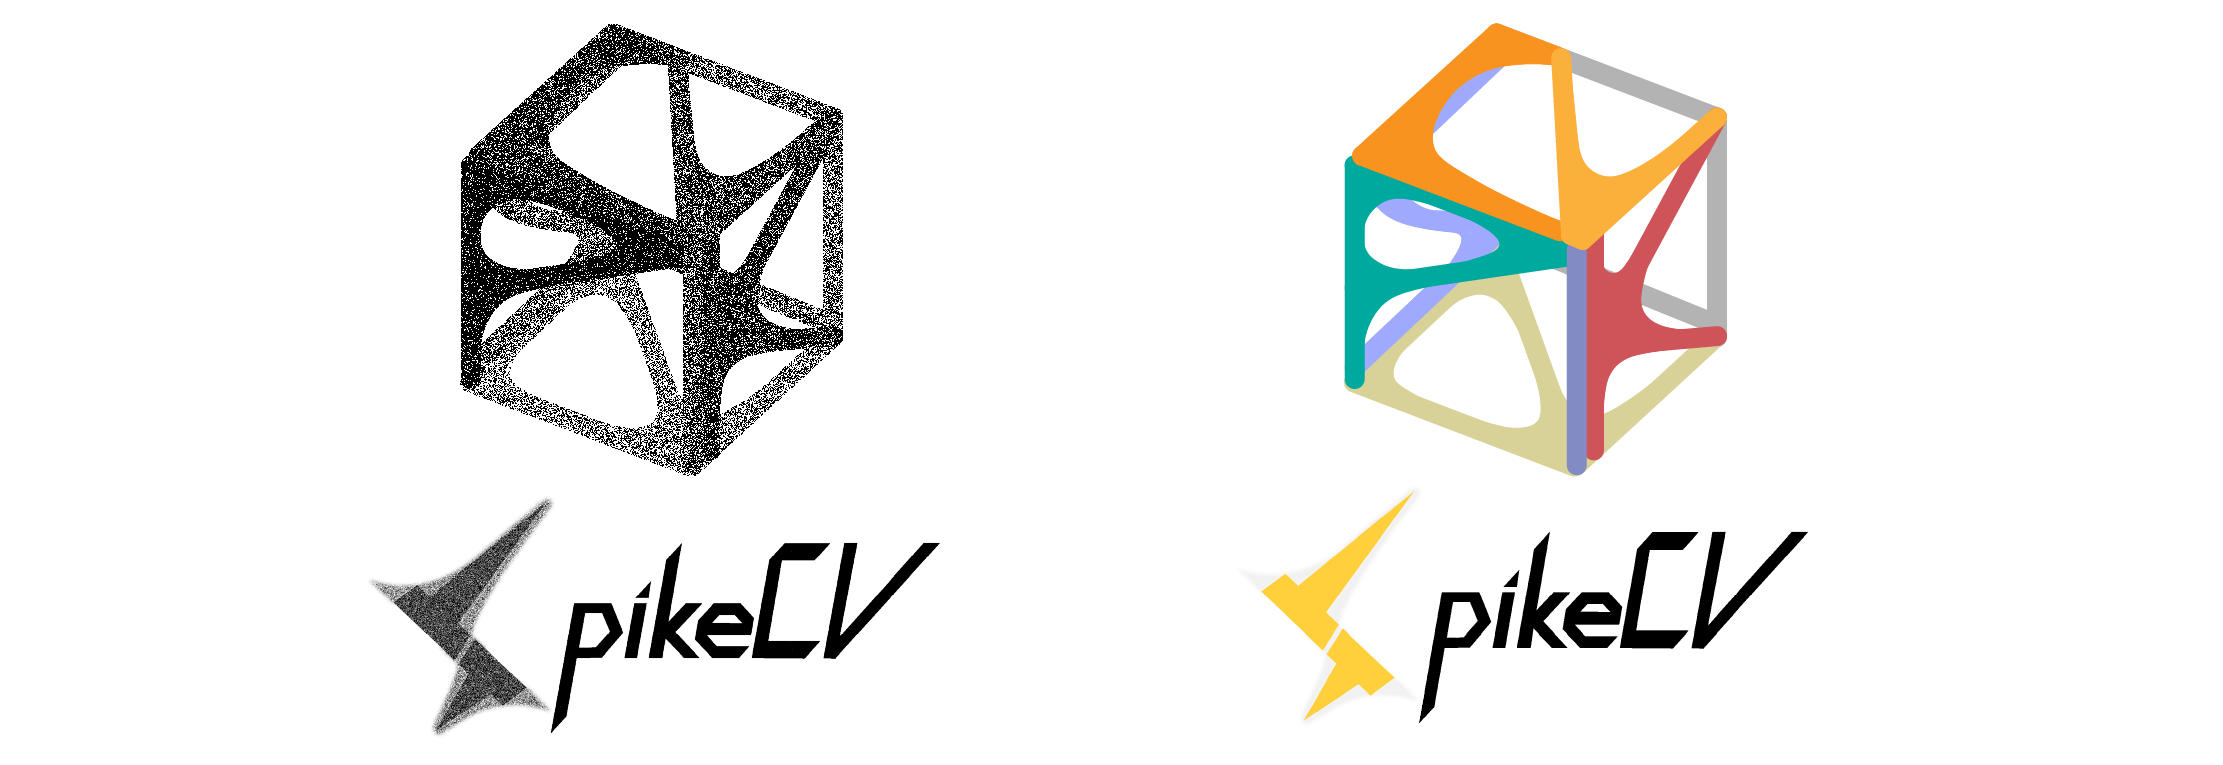 spikecv_logo